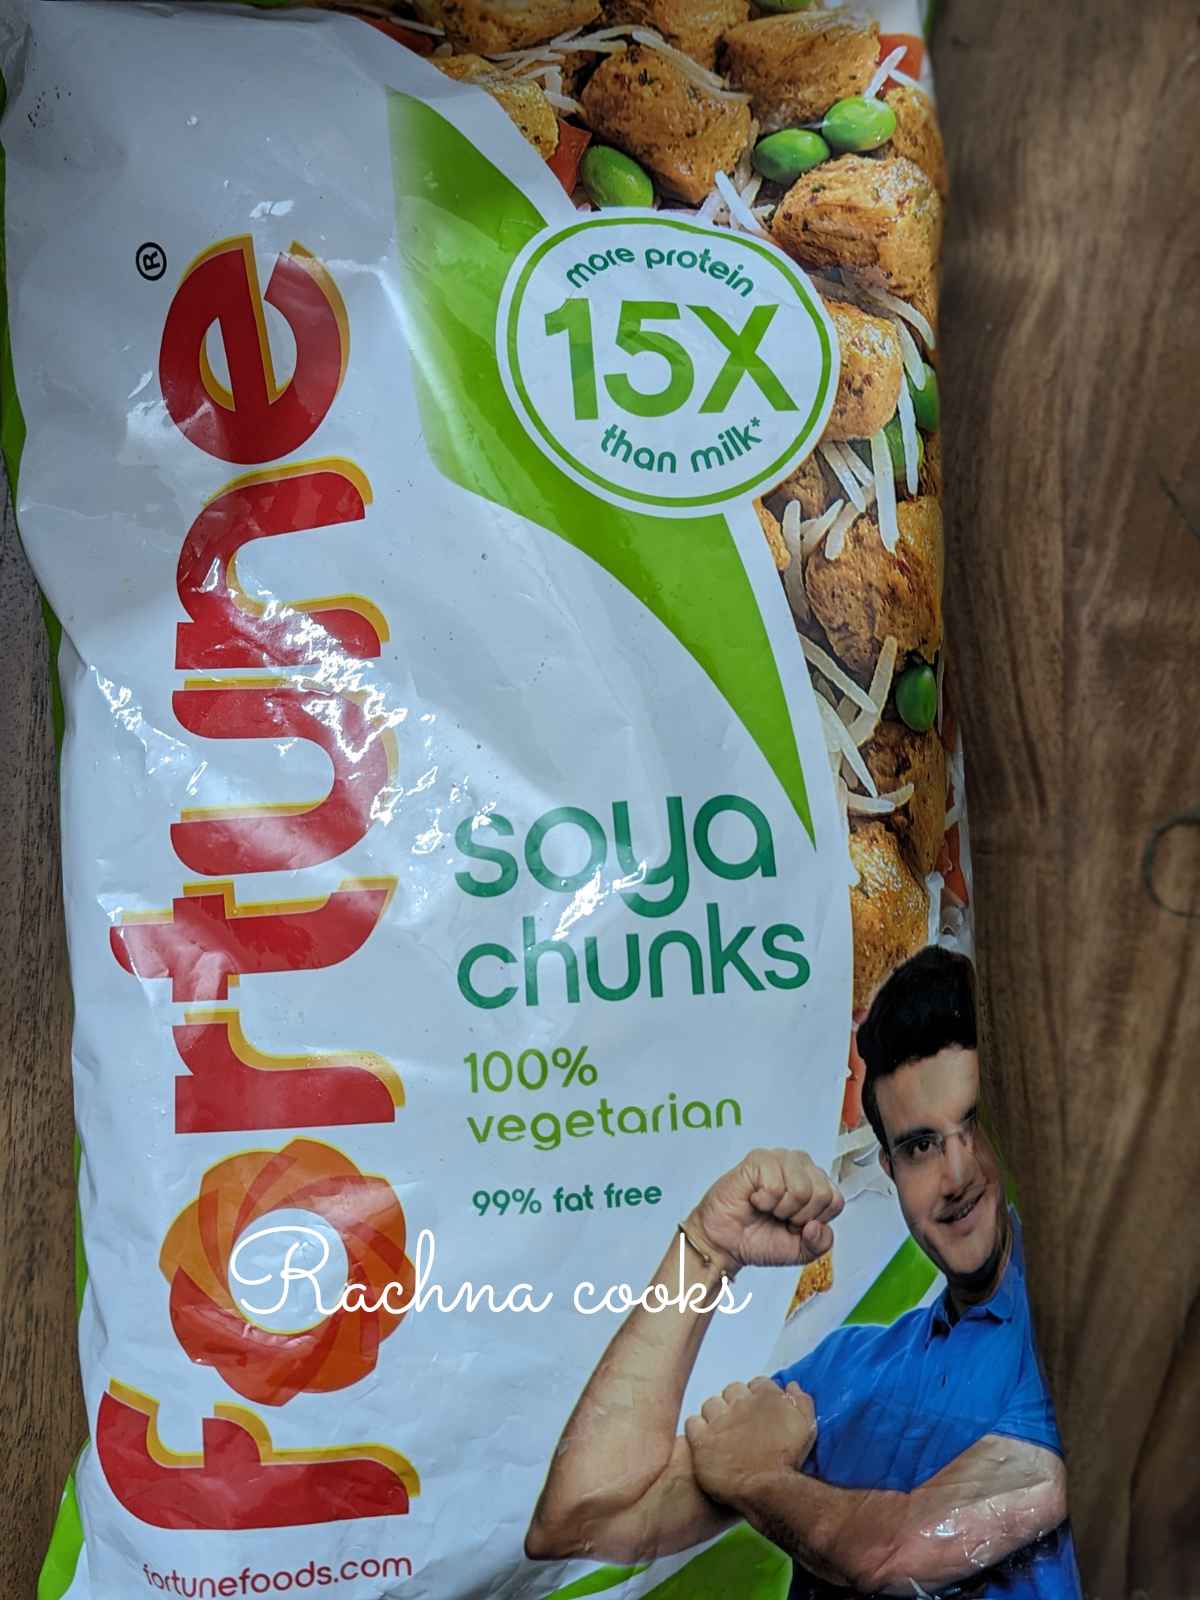 A pack of soya chunks